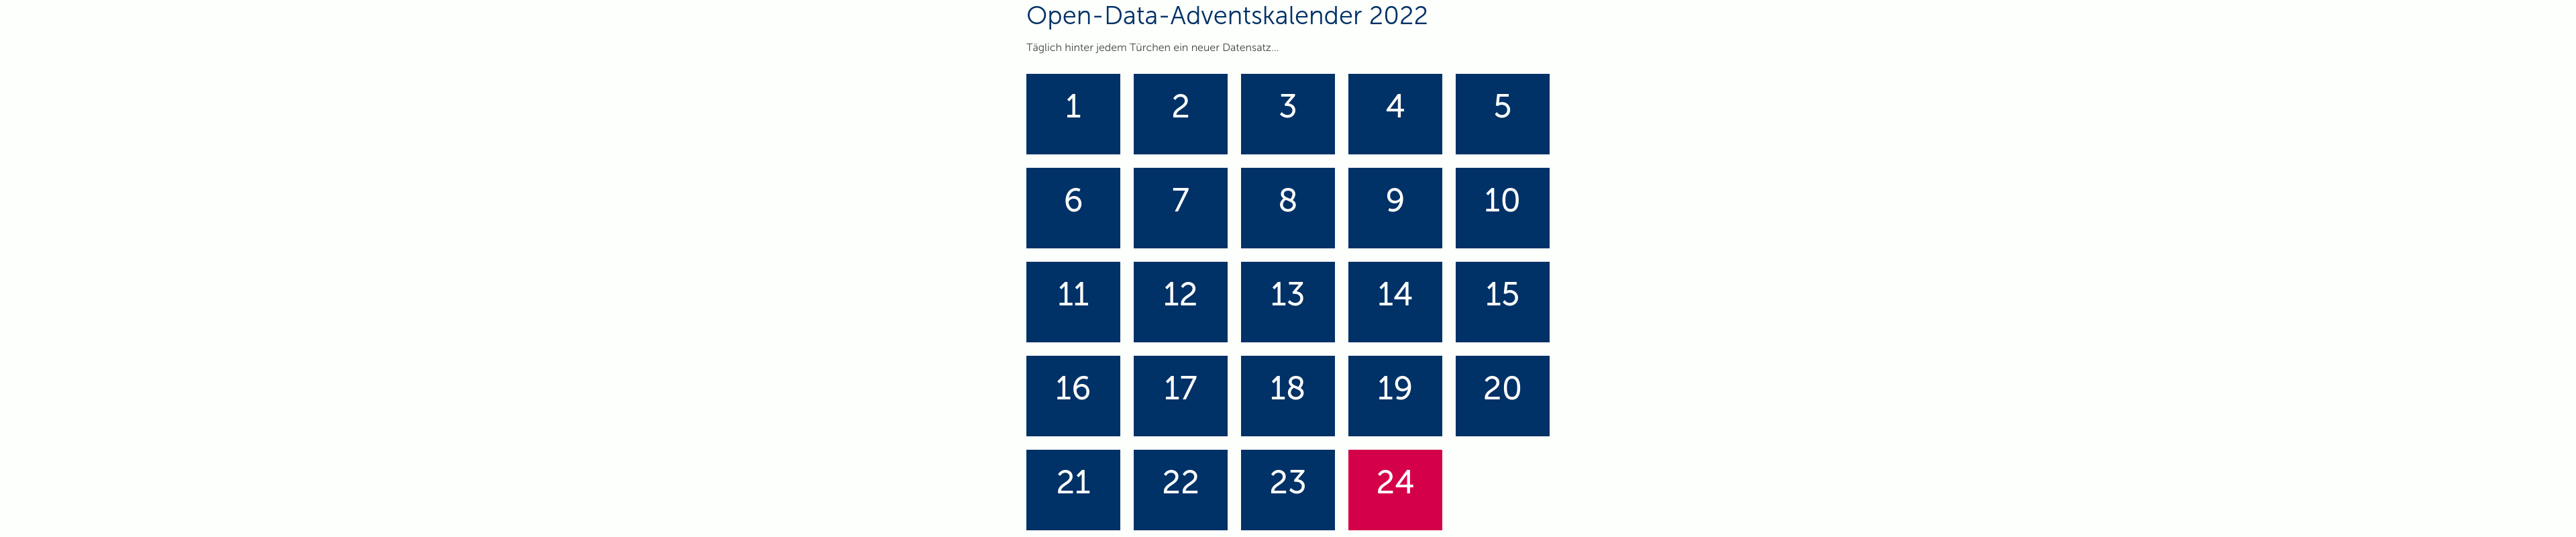 Rückblick auf den Open-Data-Adventskalender 2022